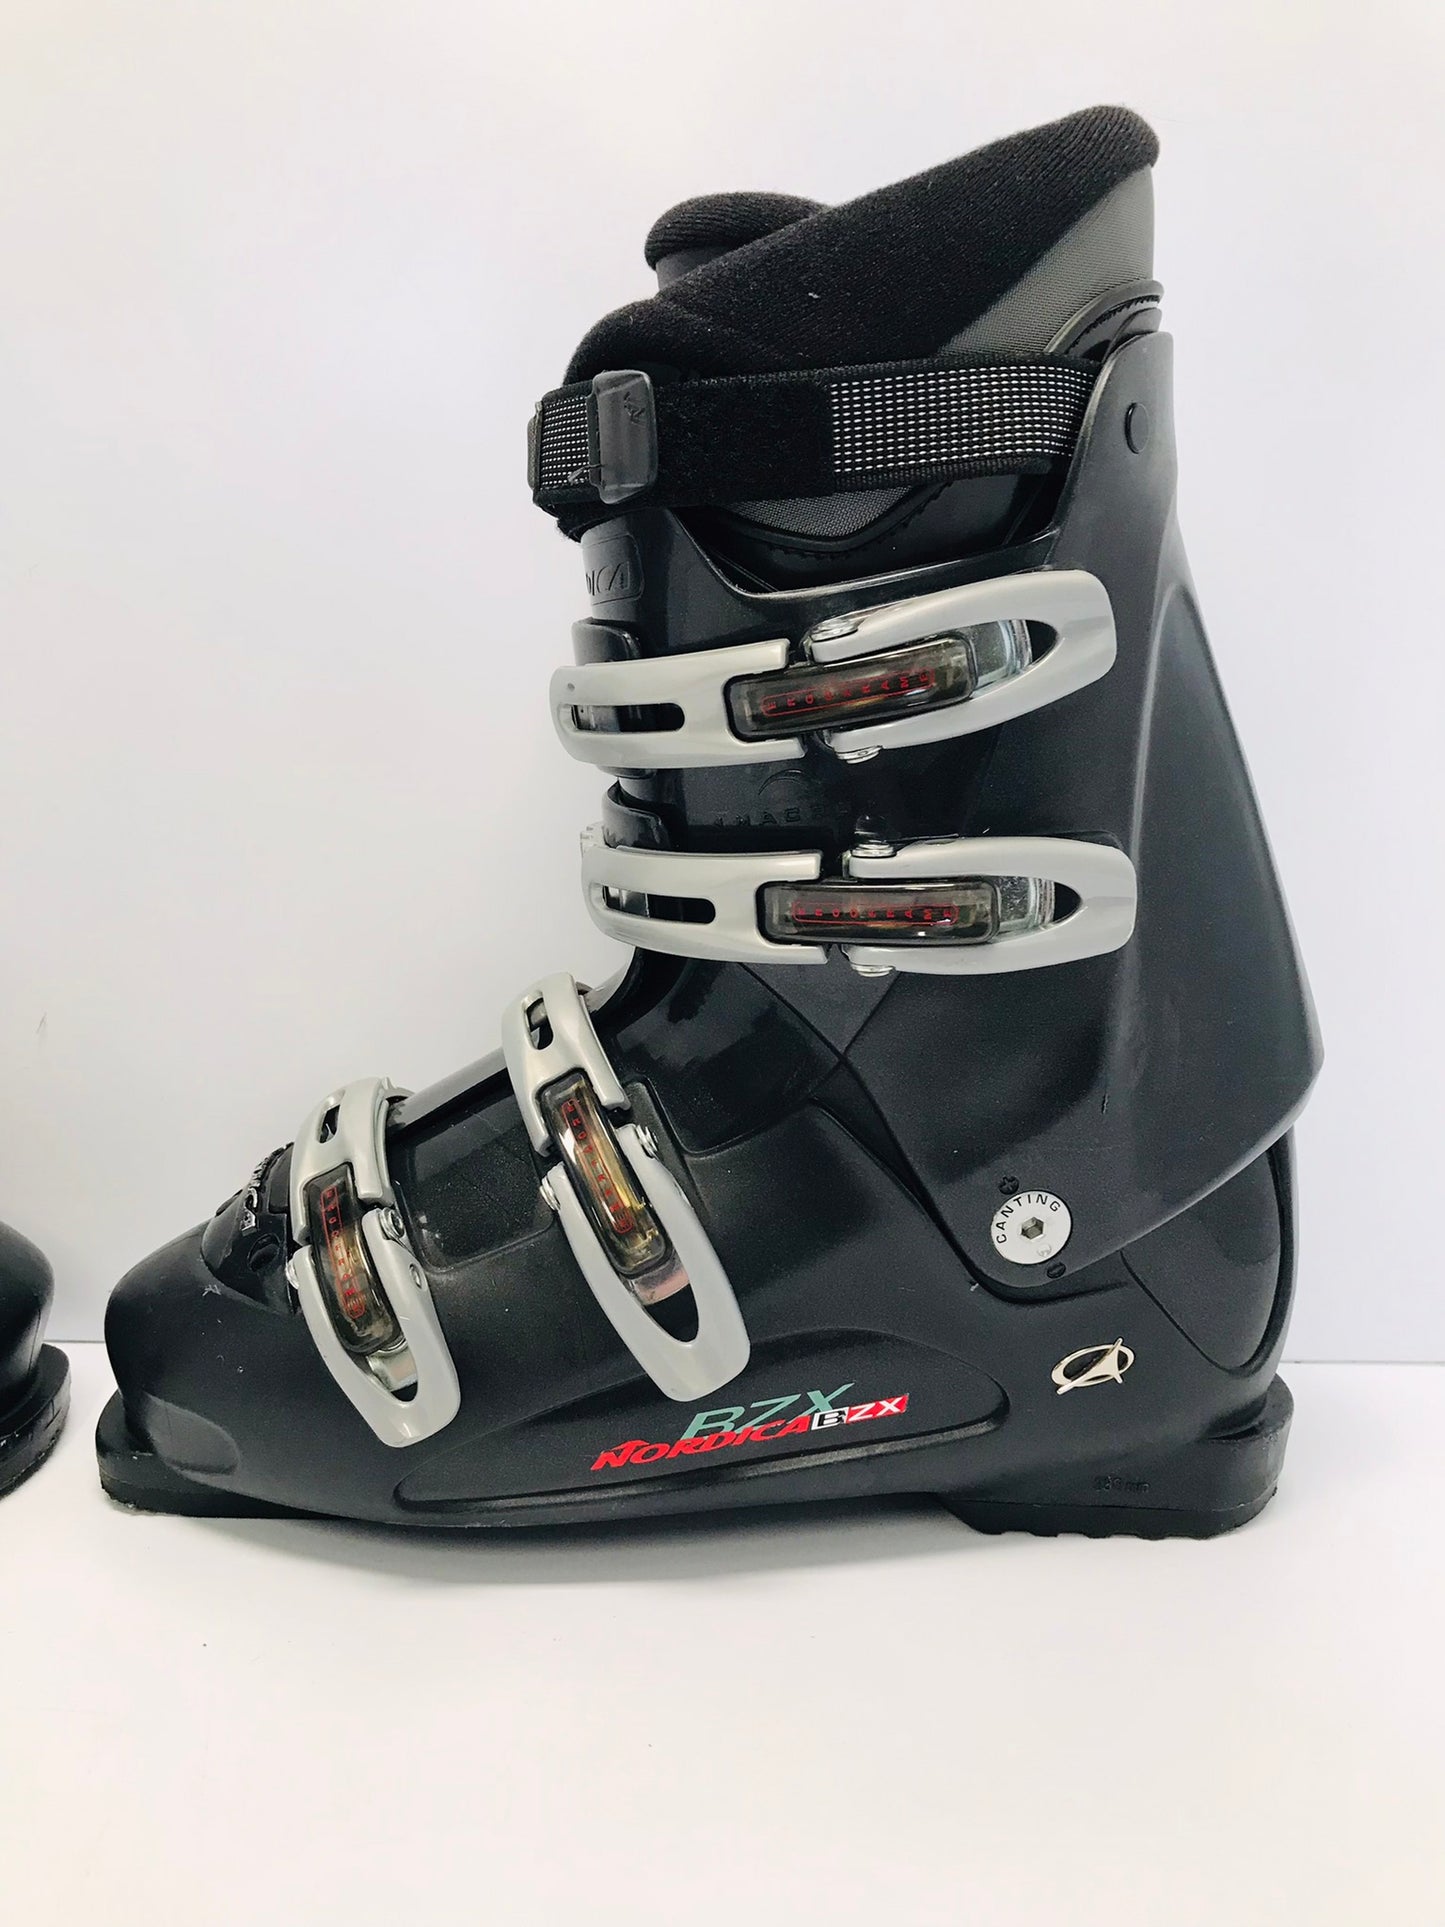 Ski Boots Mondo Size 29.0 Men's Size 11 330 mm Nordica Smoke Black Like New